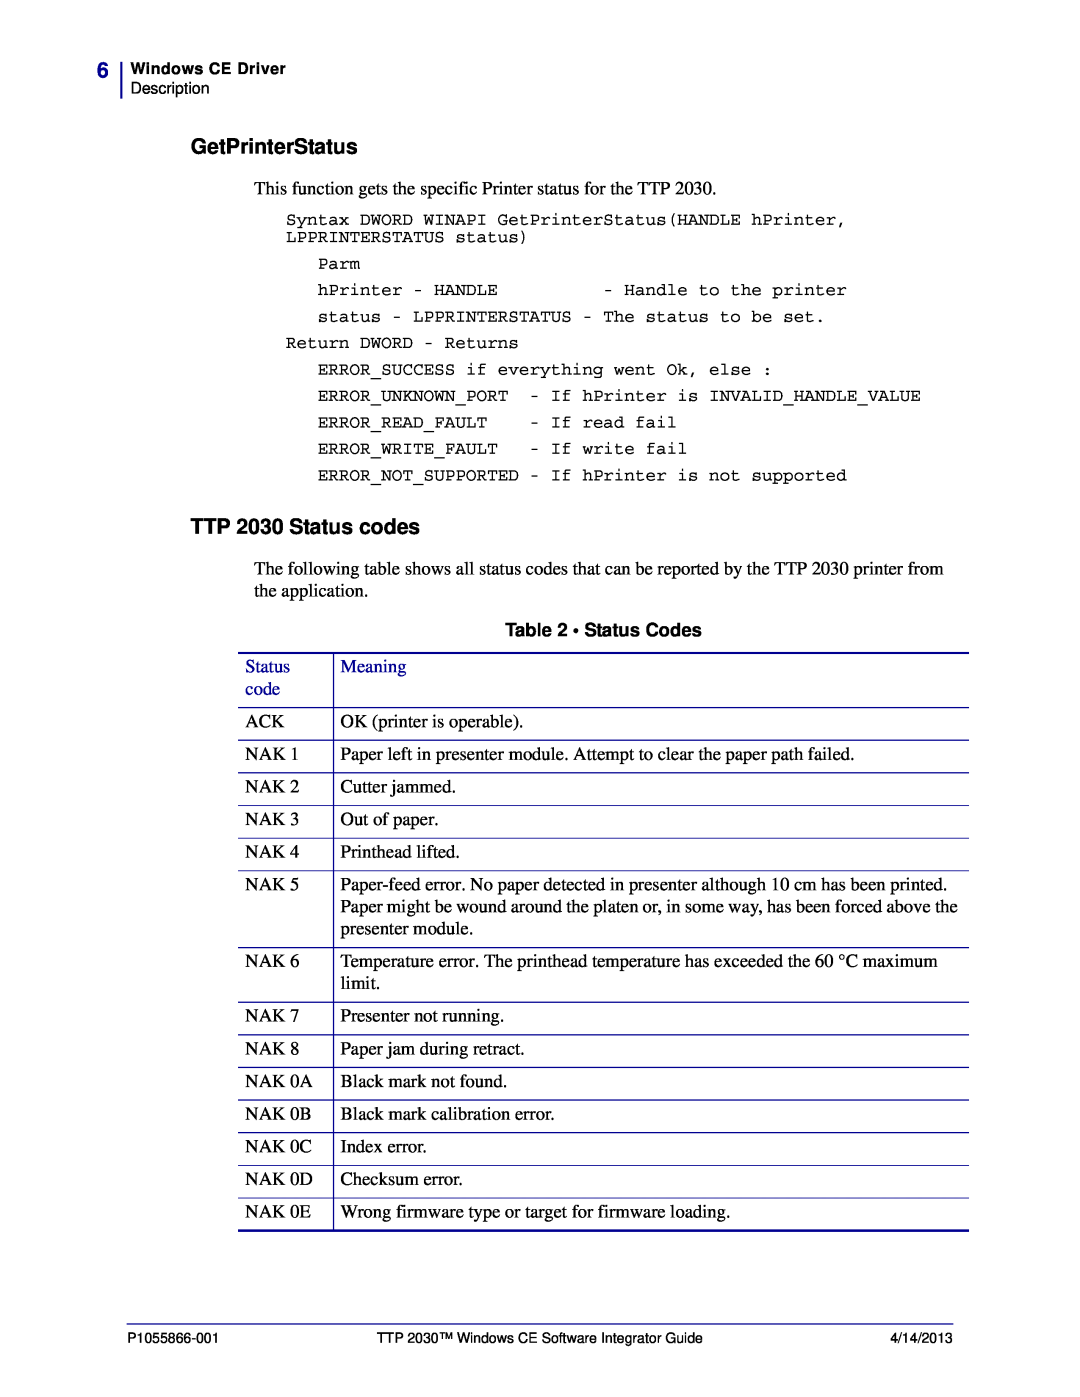 Zebra Technologies manual GetPrinterStatus, TTP 2030 Status codes, Status Codes, Meaning 